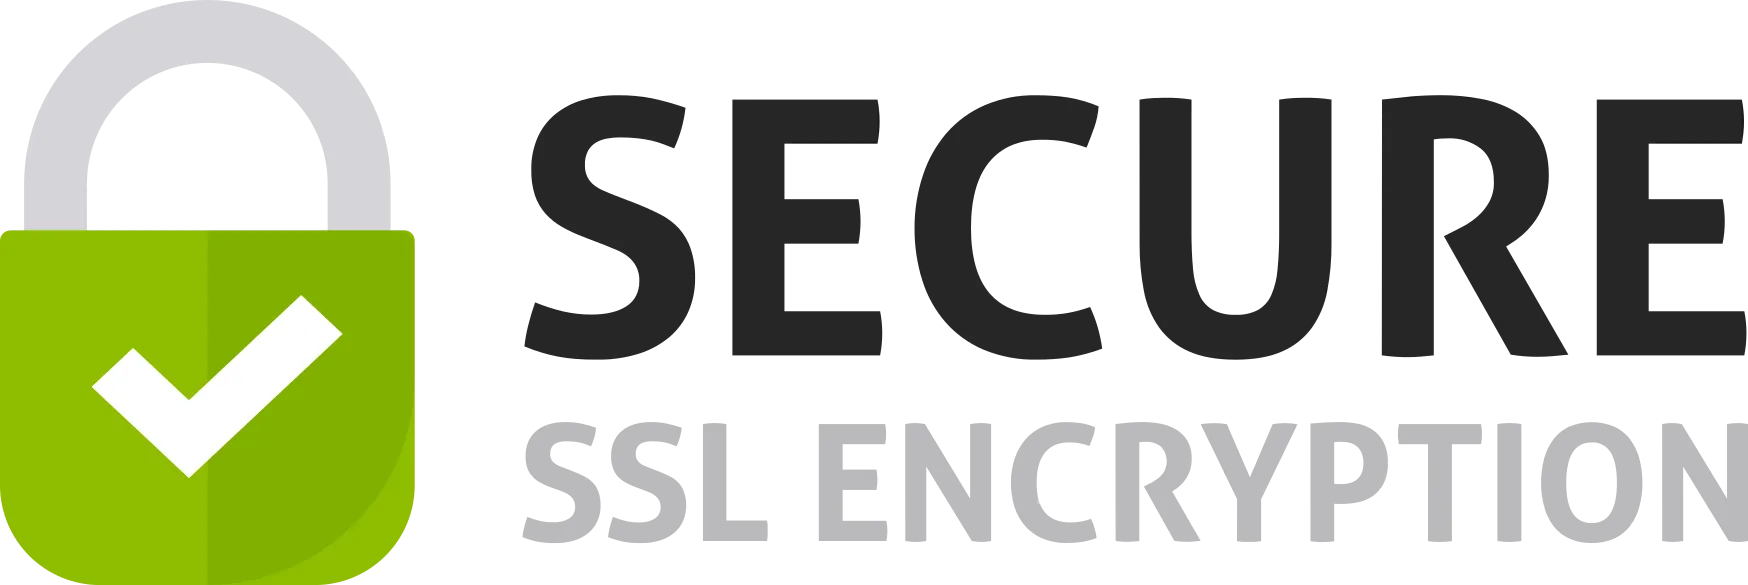 Secure ssl Encryption